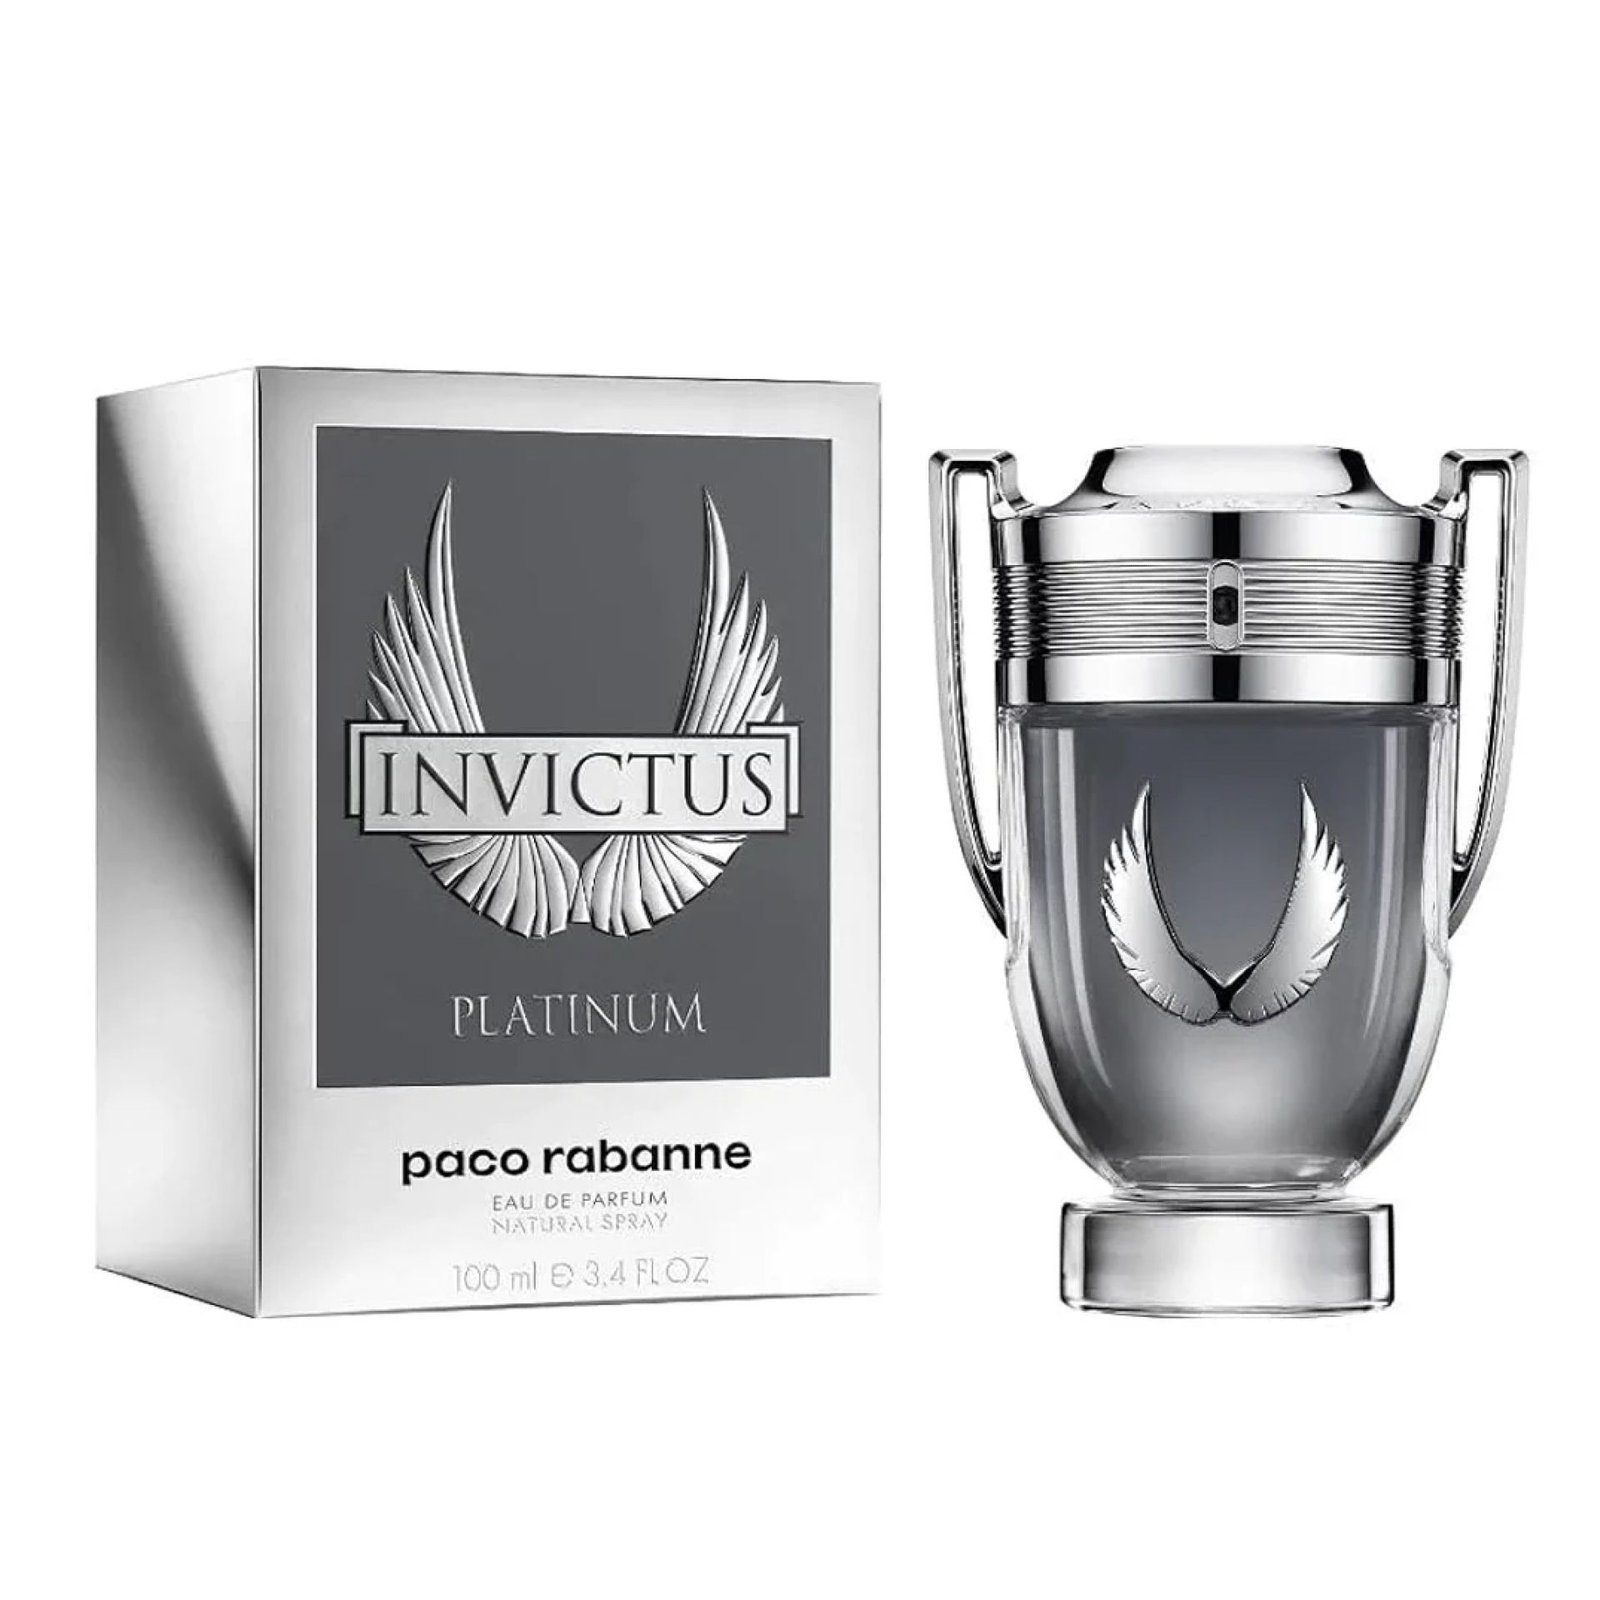 Buy Invictus Paco Rabanne Platinum Eau De Parfum - 100ml at Rs. 20000 from Likeshop.pk